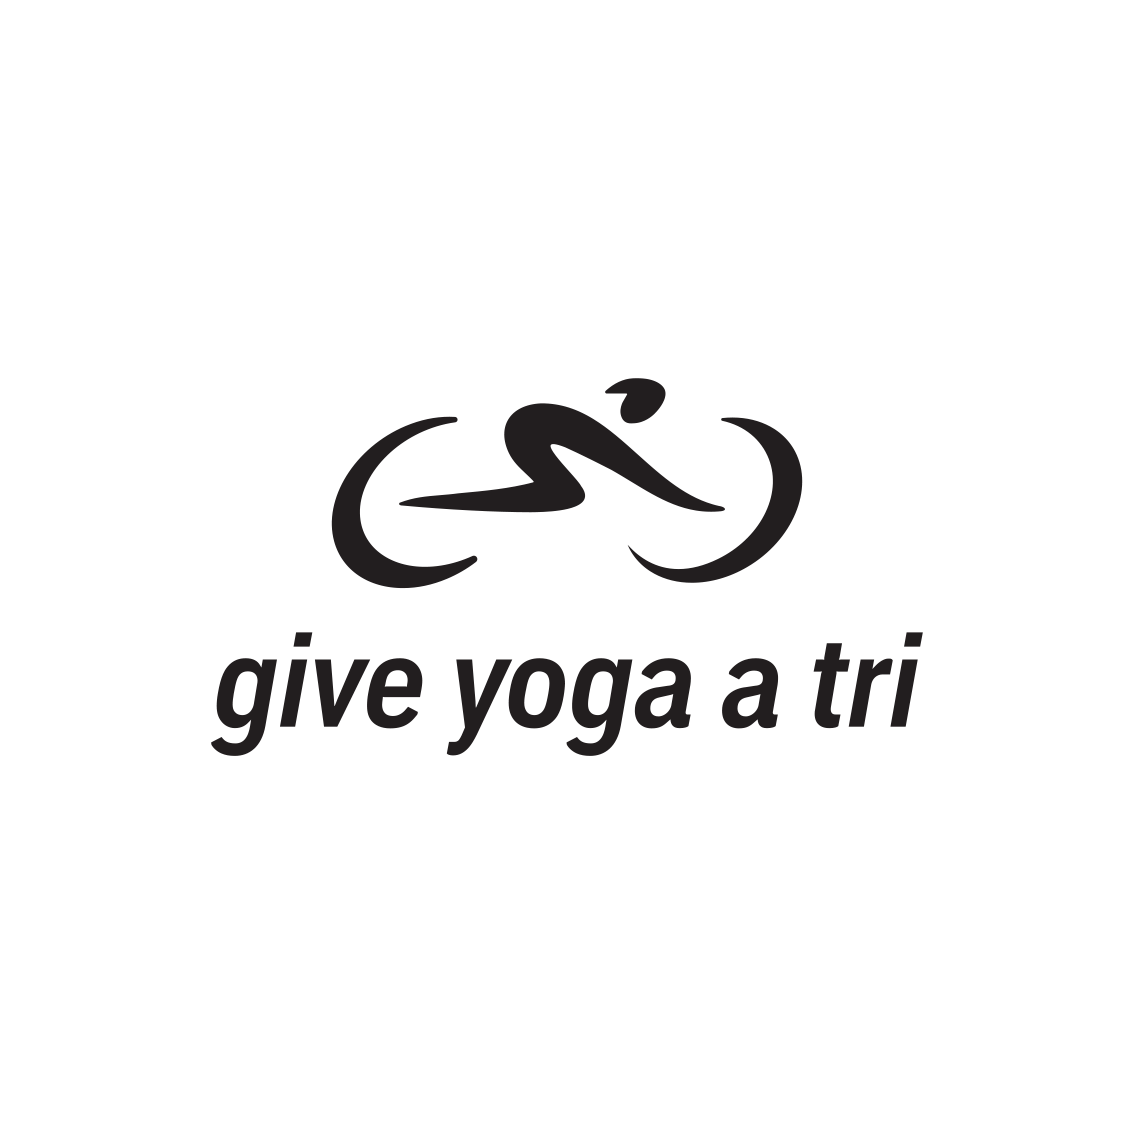 Give Yoga_logos-11.png